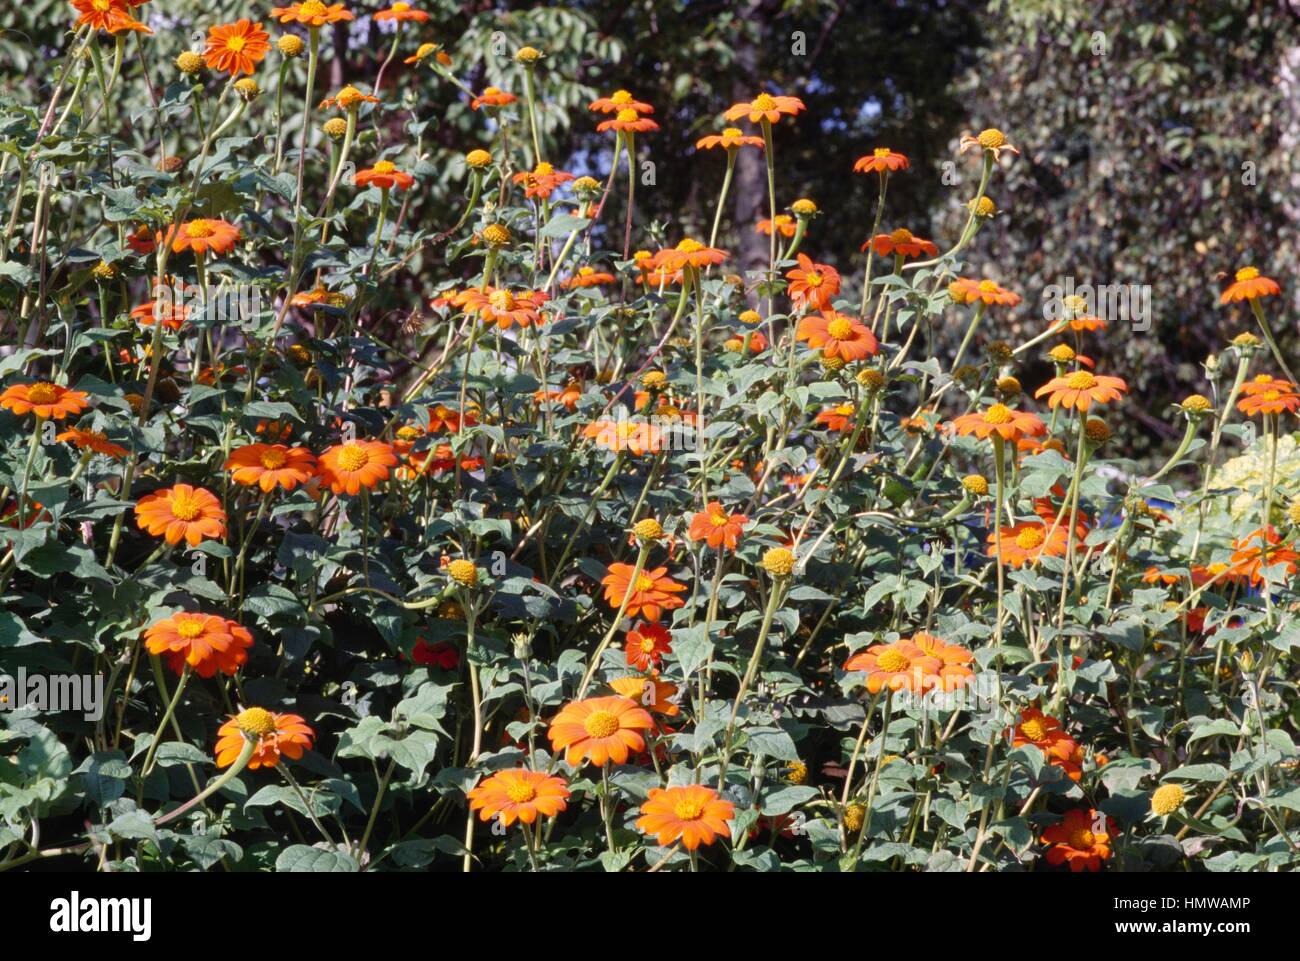 Mexican Sunflower (Tithonia rotundifolia or Titonia speciosa), Asteraceae. Stock Photo